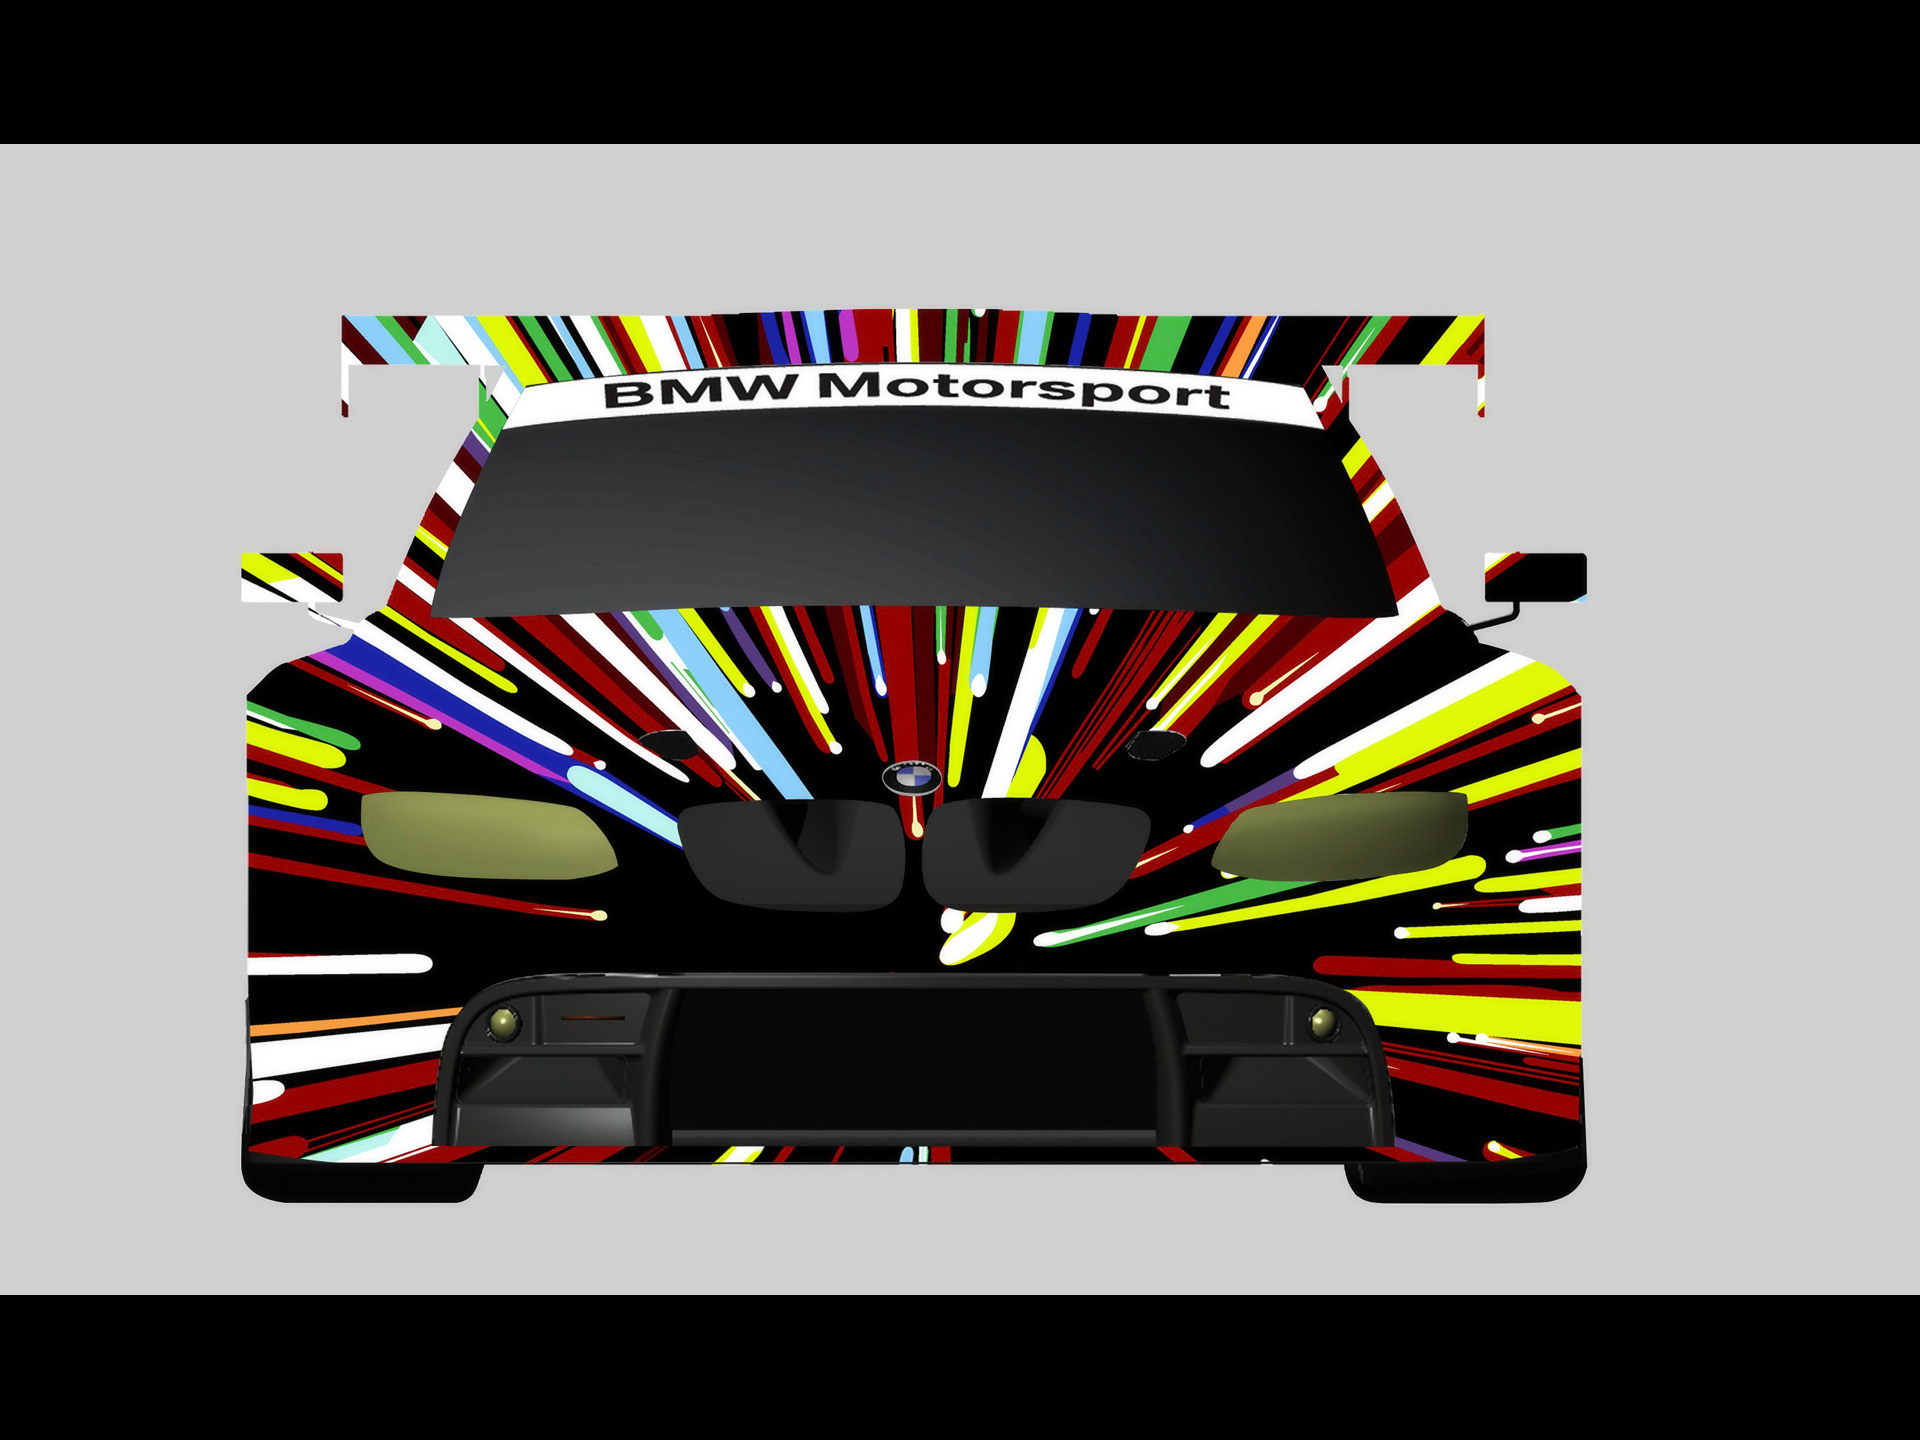 M3 Gt2 Art Car By Jeff Koons Design Concept Wallpaper